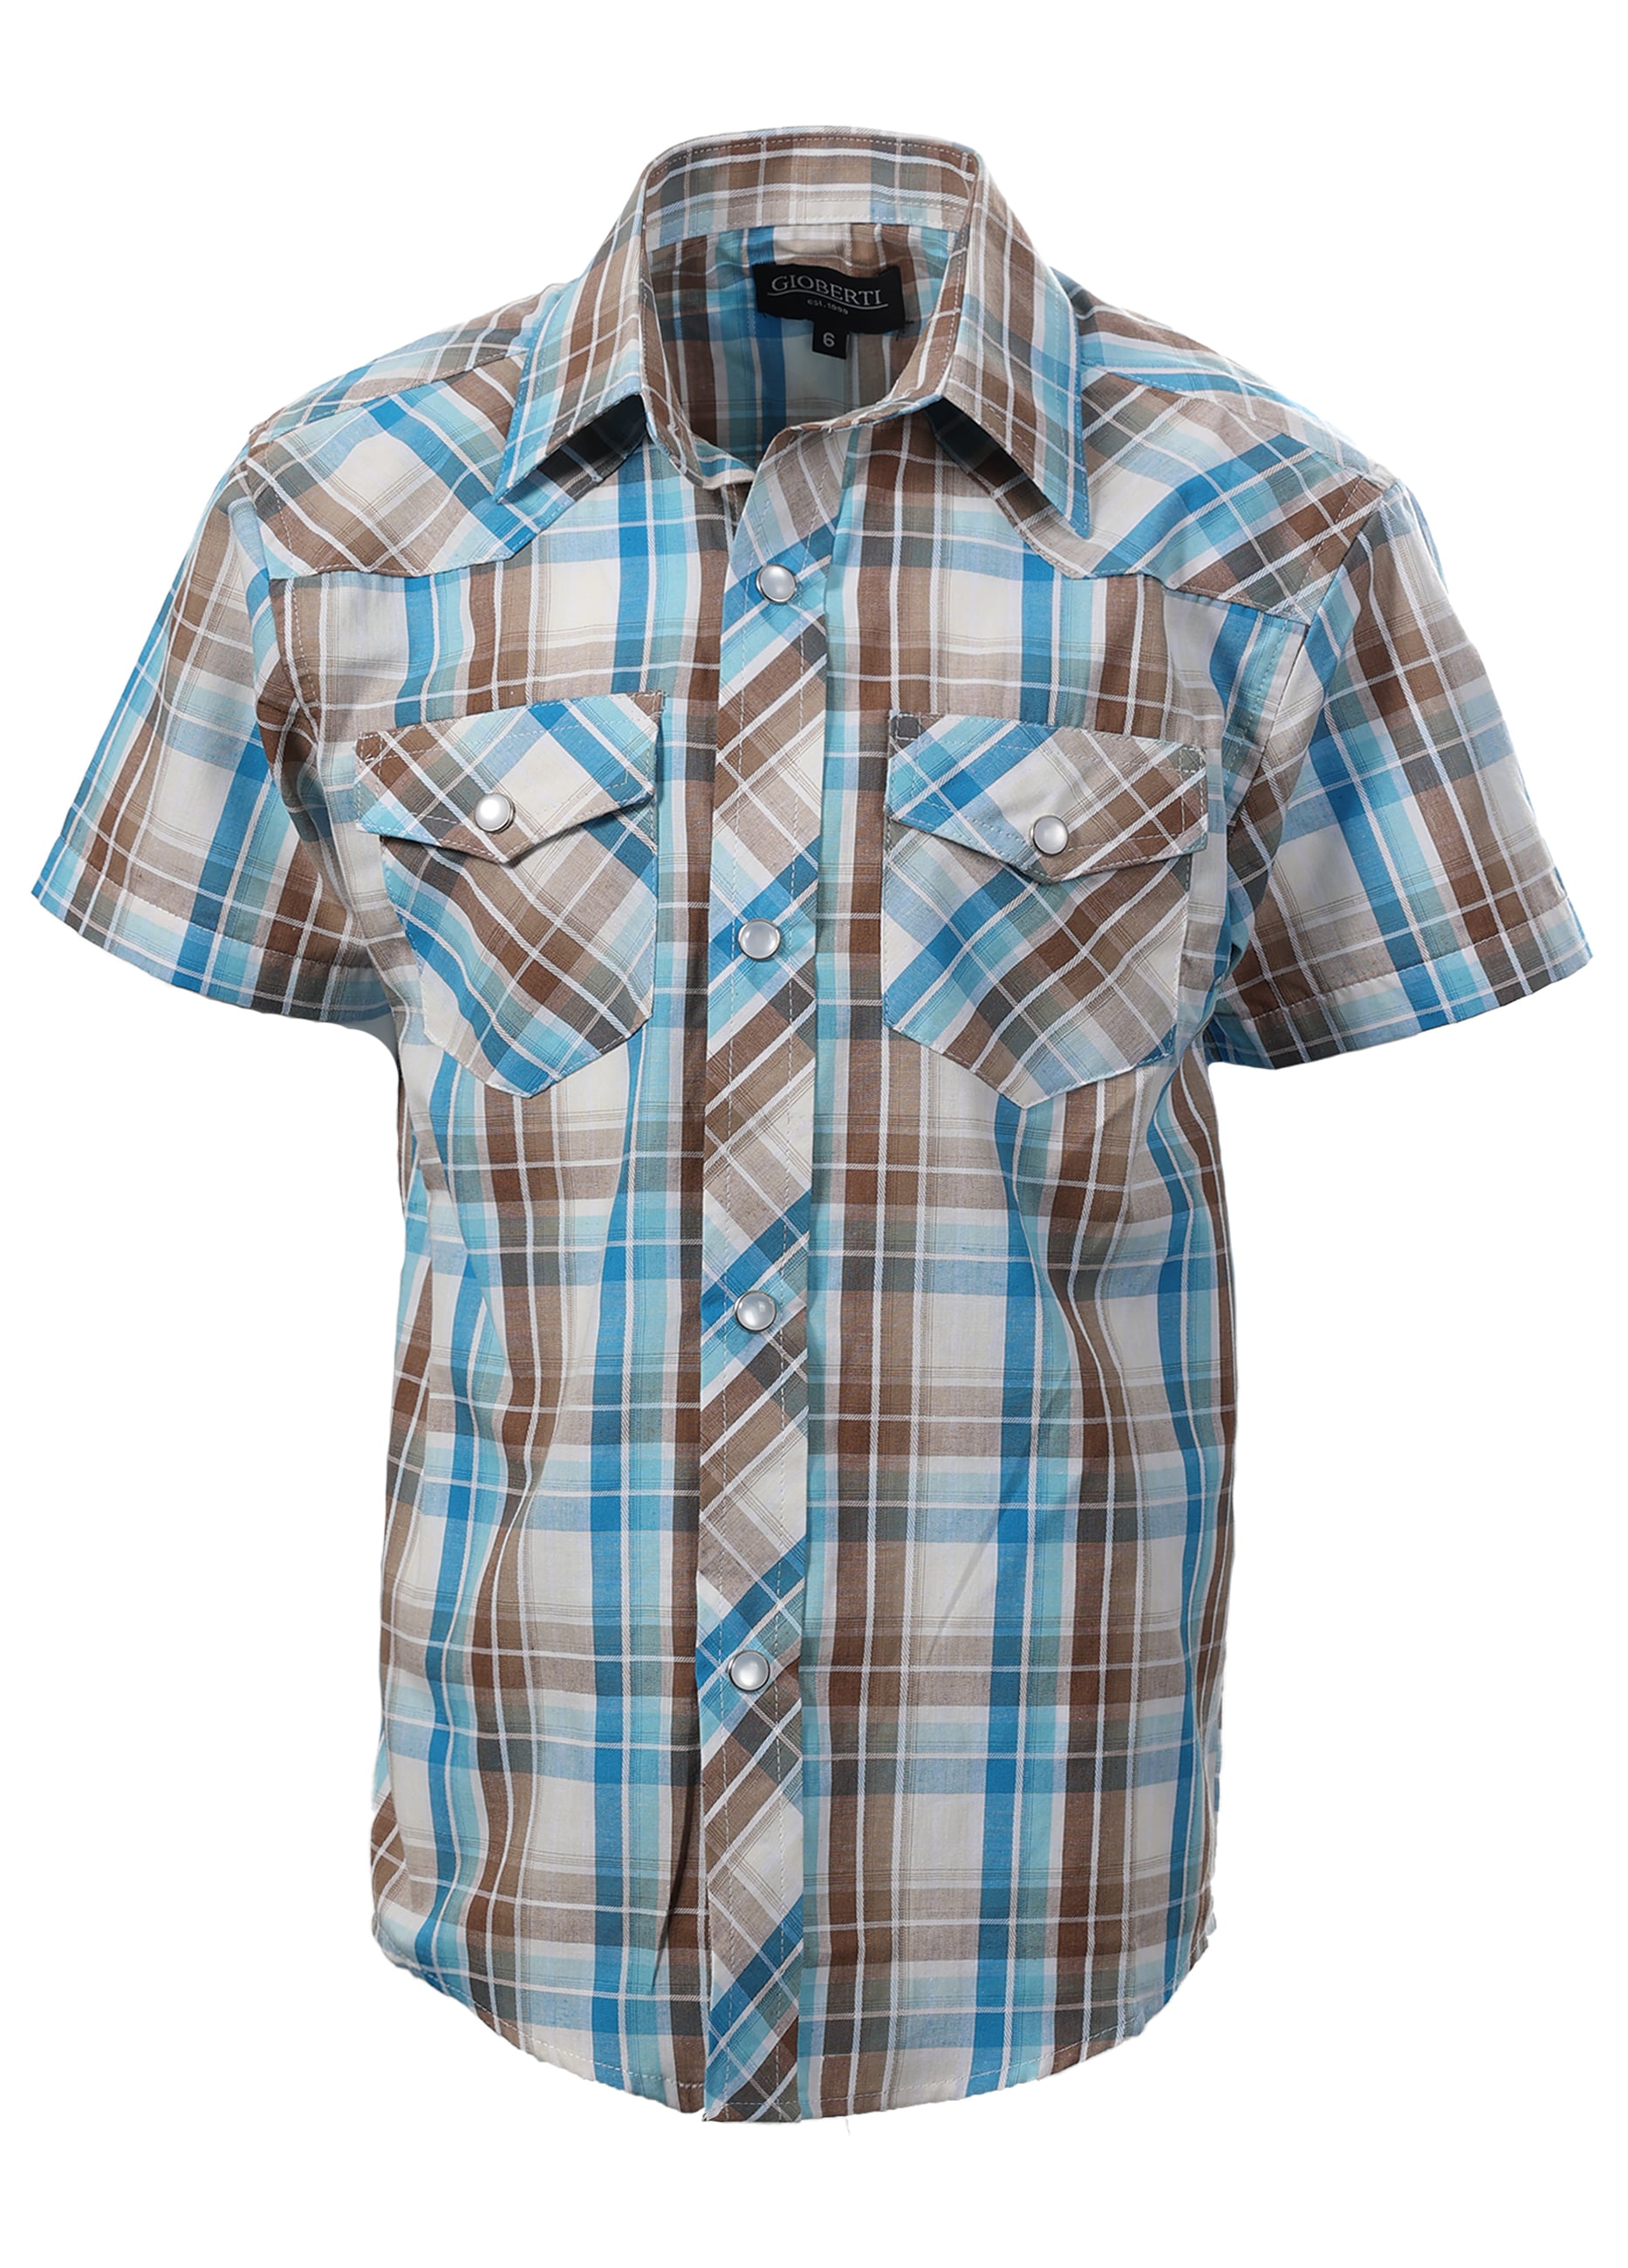 Gioberti Boys Casual Western Plaid Pearl Snap-on Buttons Short Sleeve Shirt 